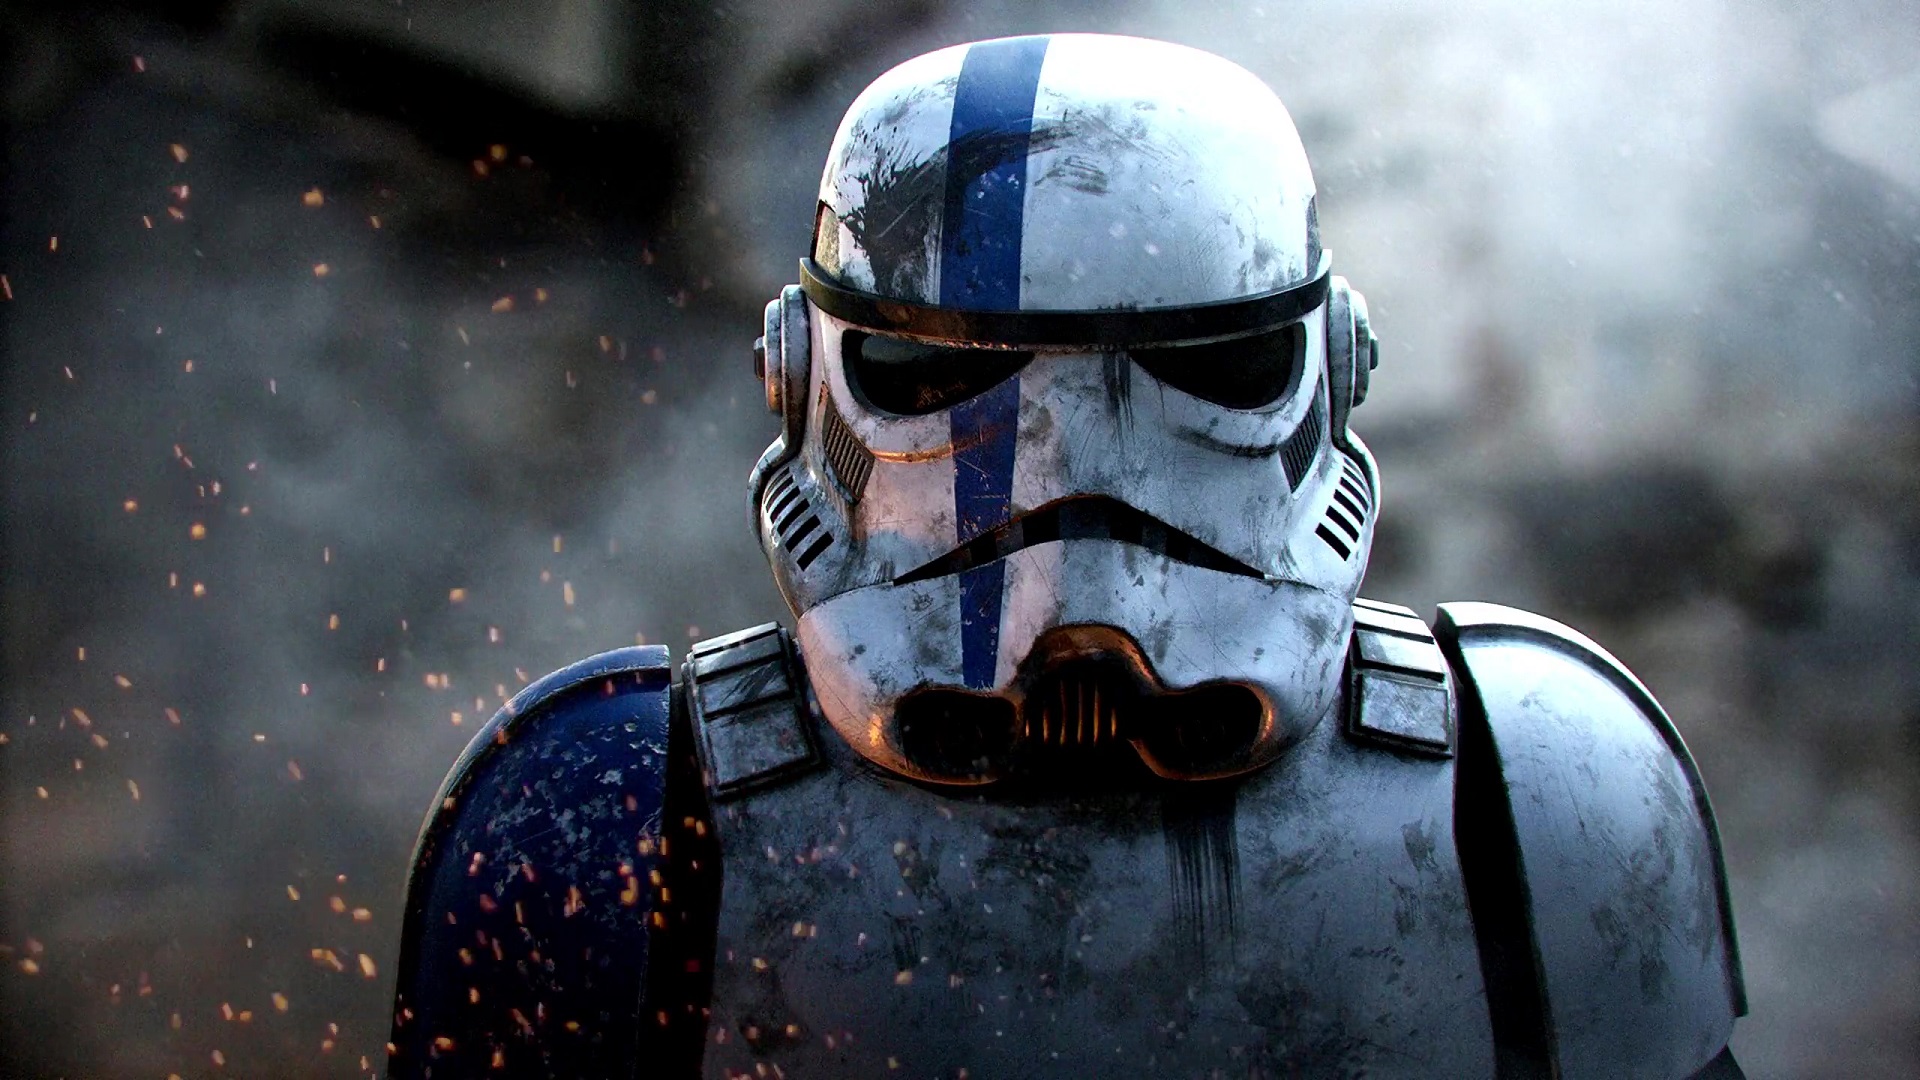 Star wars wallpaper stormtrooper